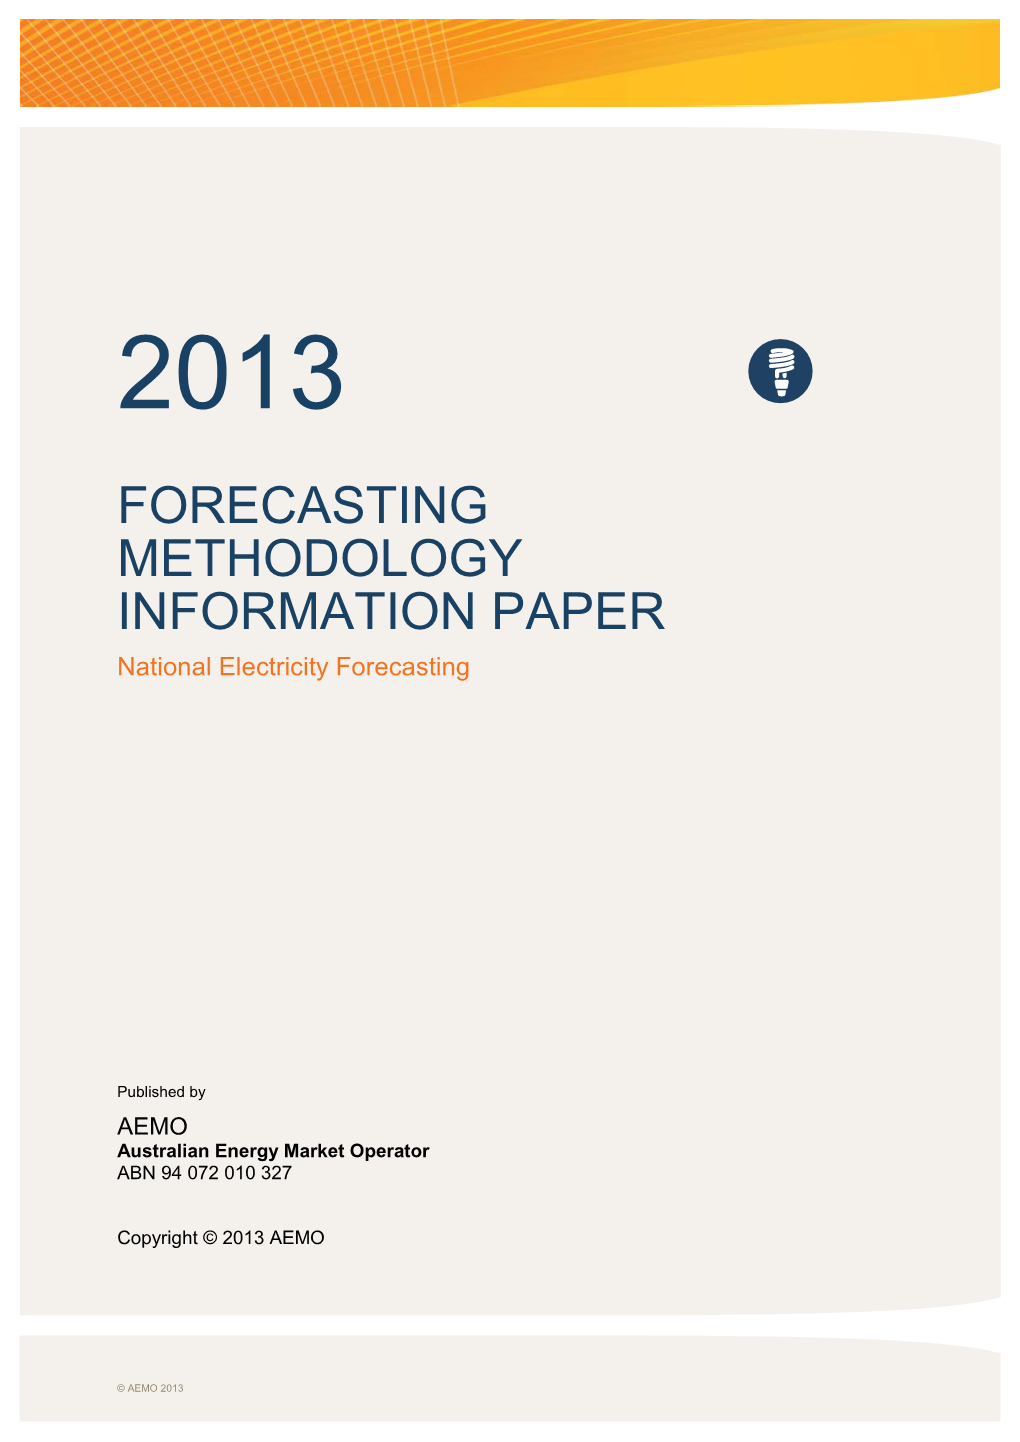 Forecasting Methodology Information Paper